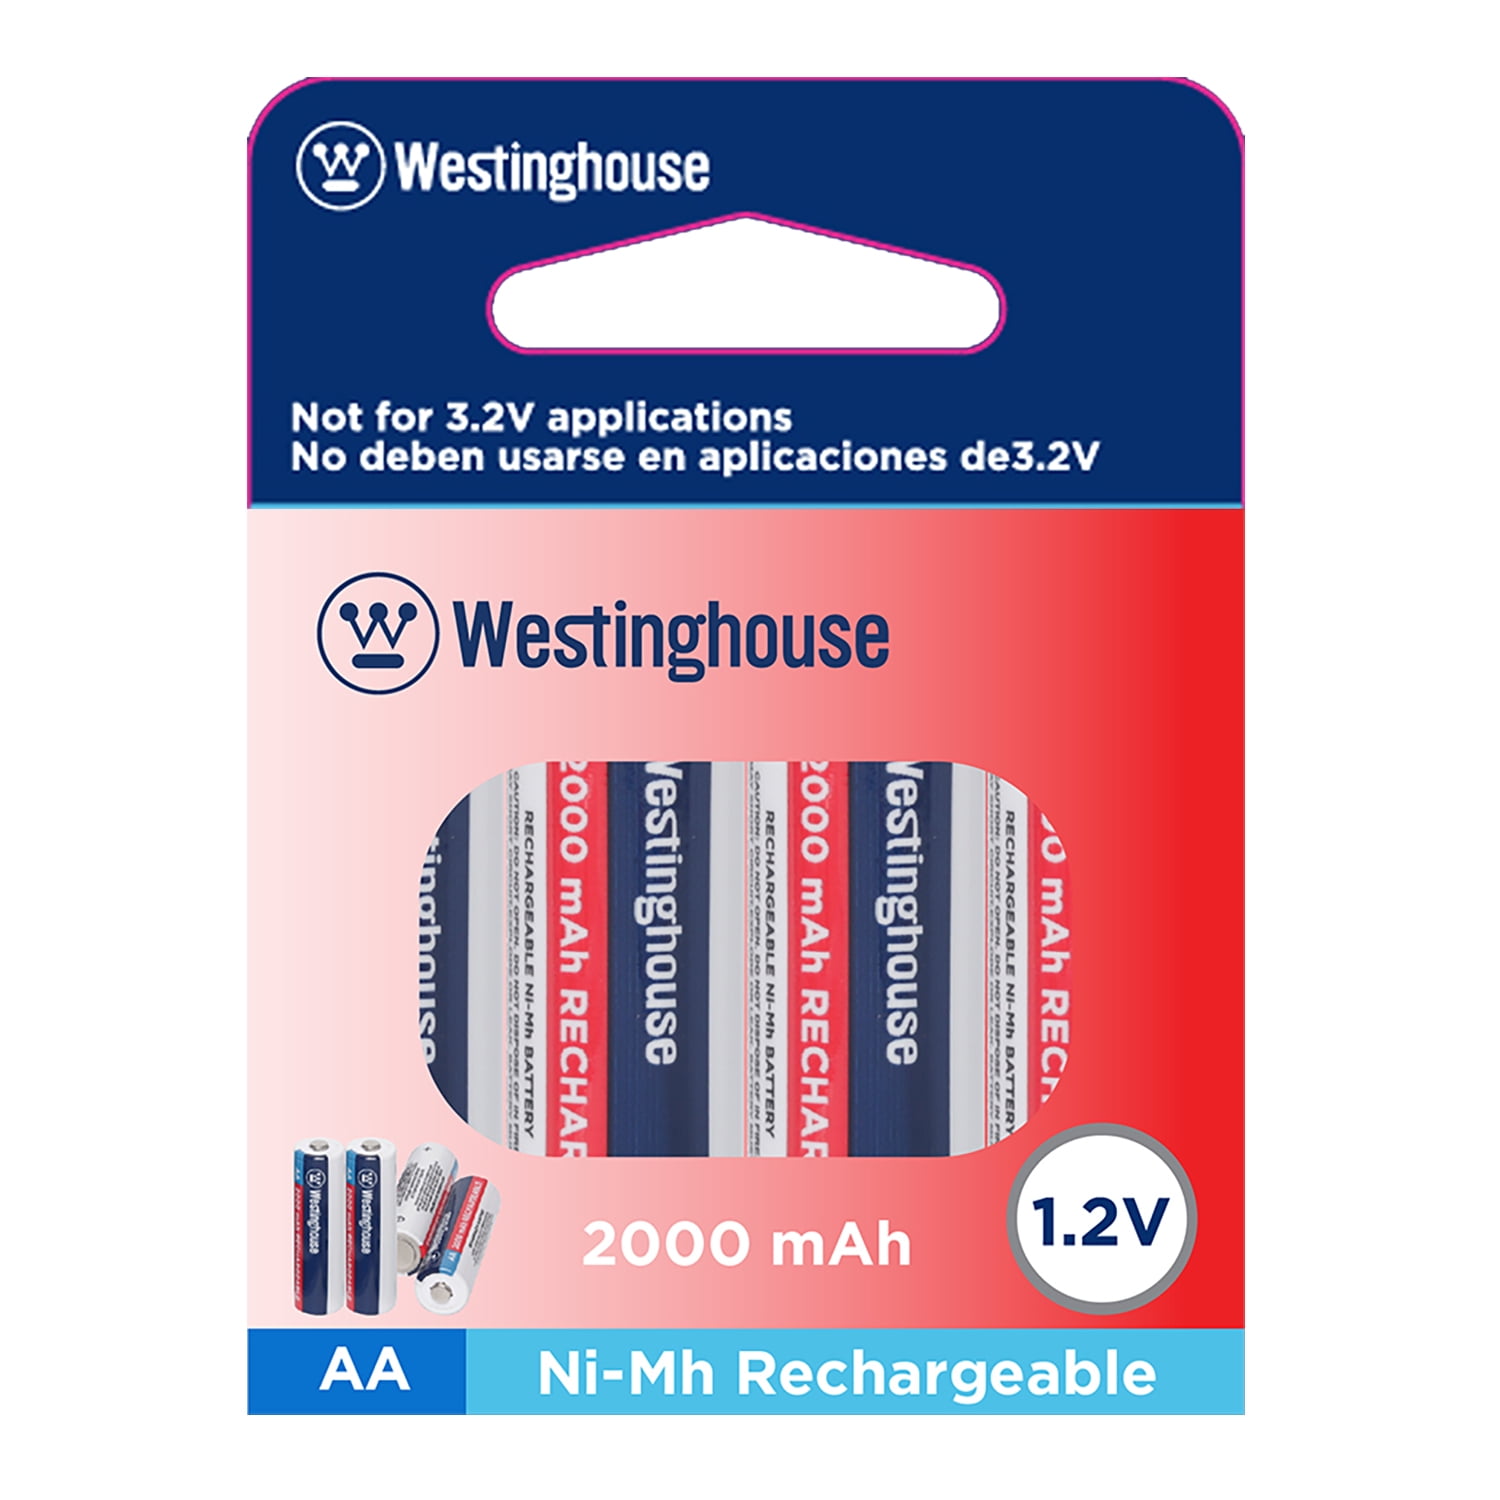 Westinghouse 2000 mAh AA Ni-MH Rechargable Battery